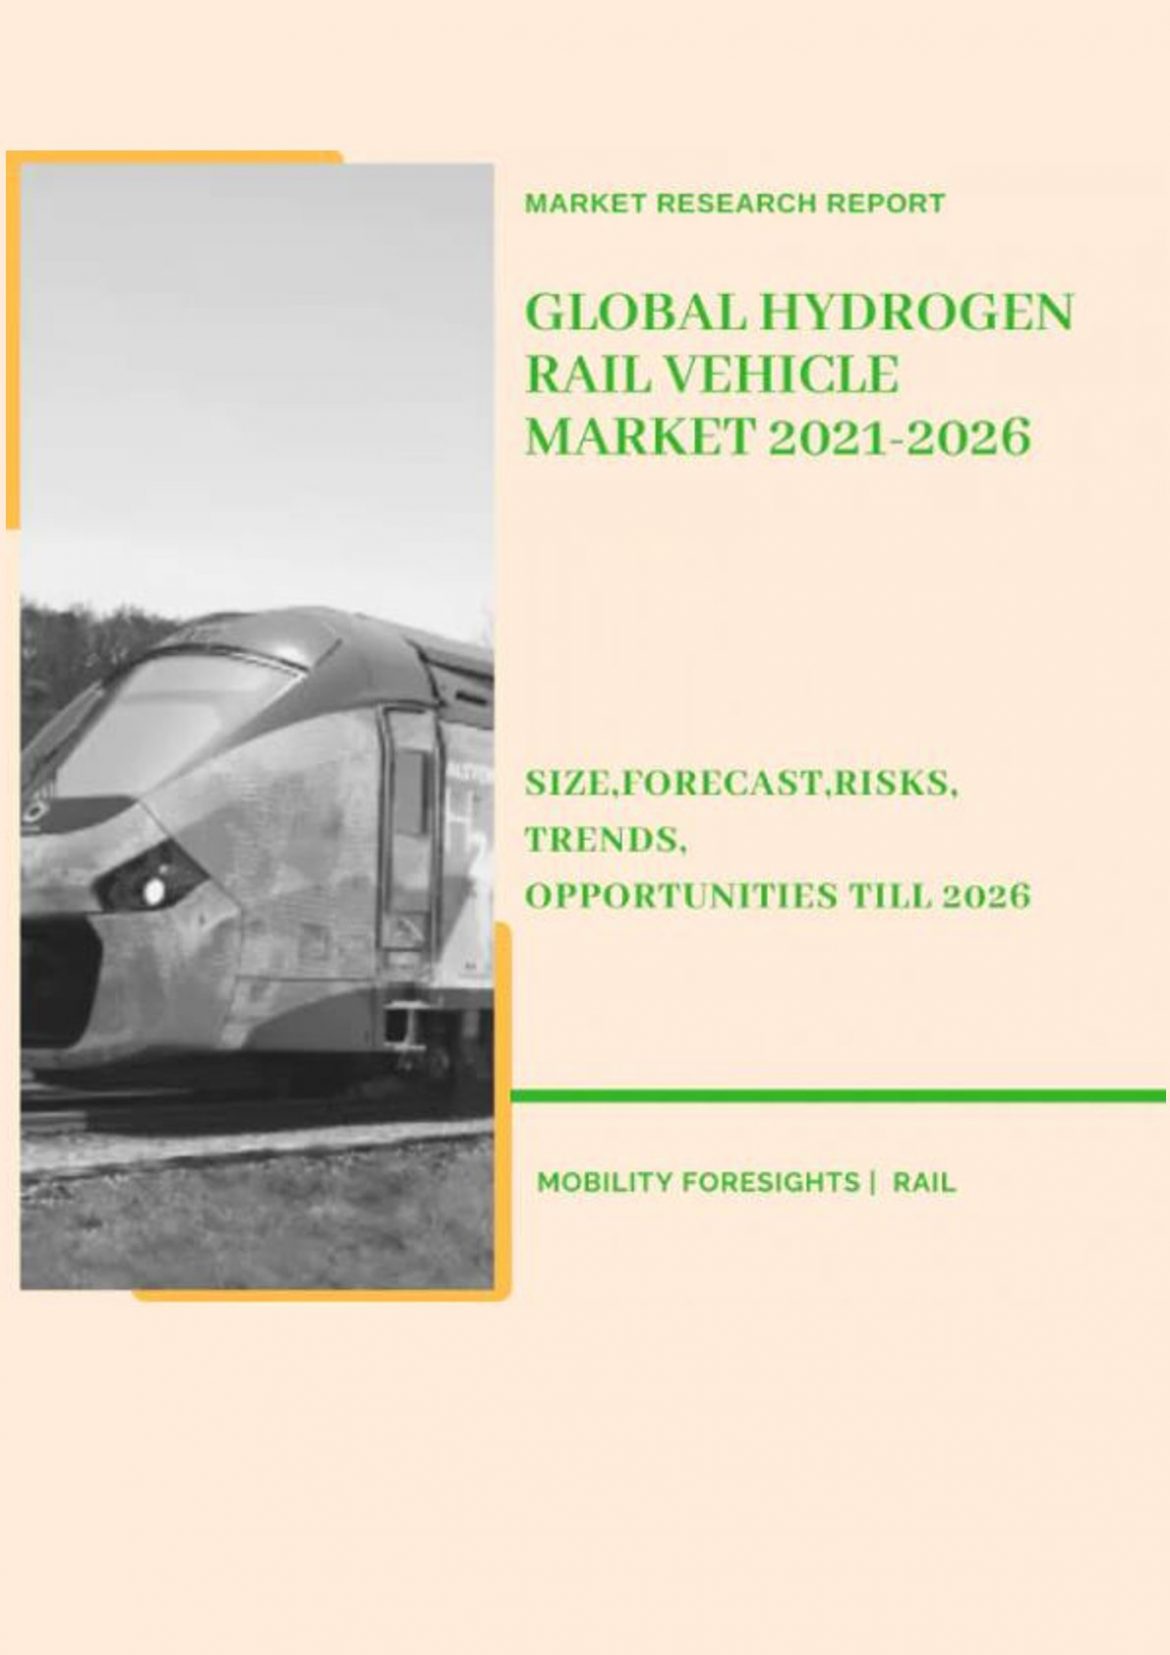 Global Hydrogen Rail Vehicle Market 2021-2026